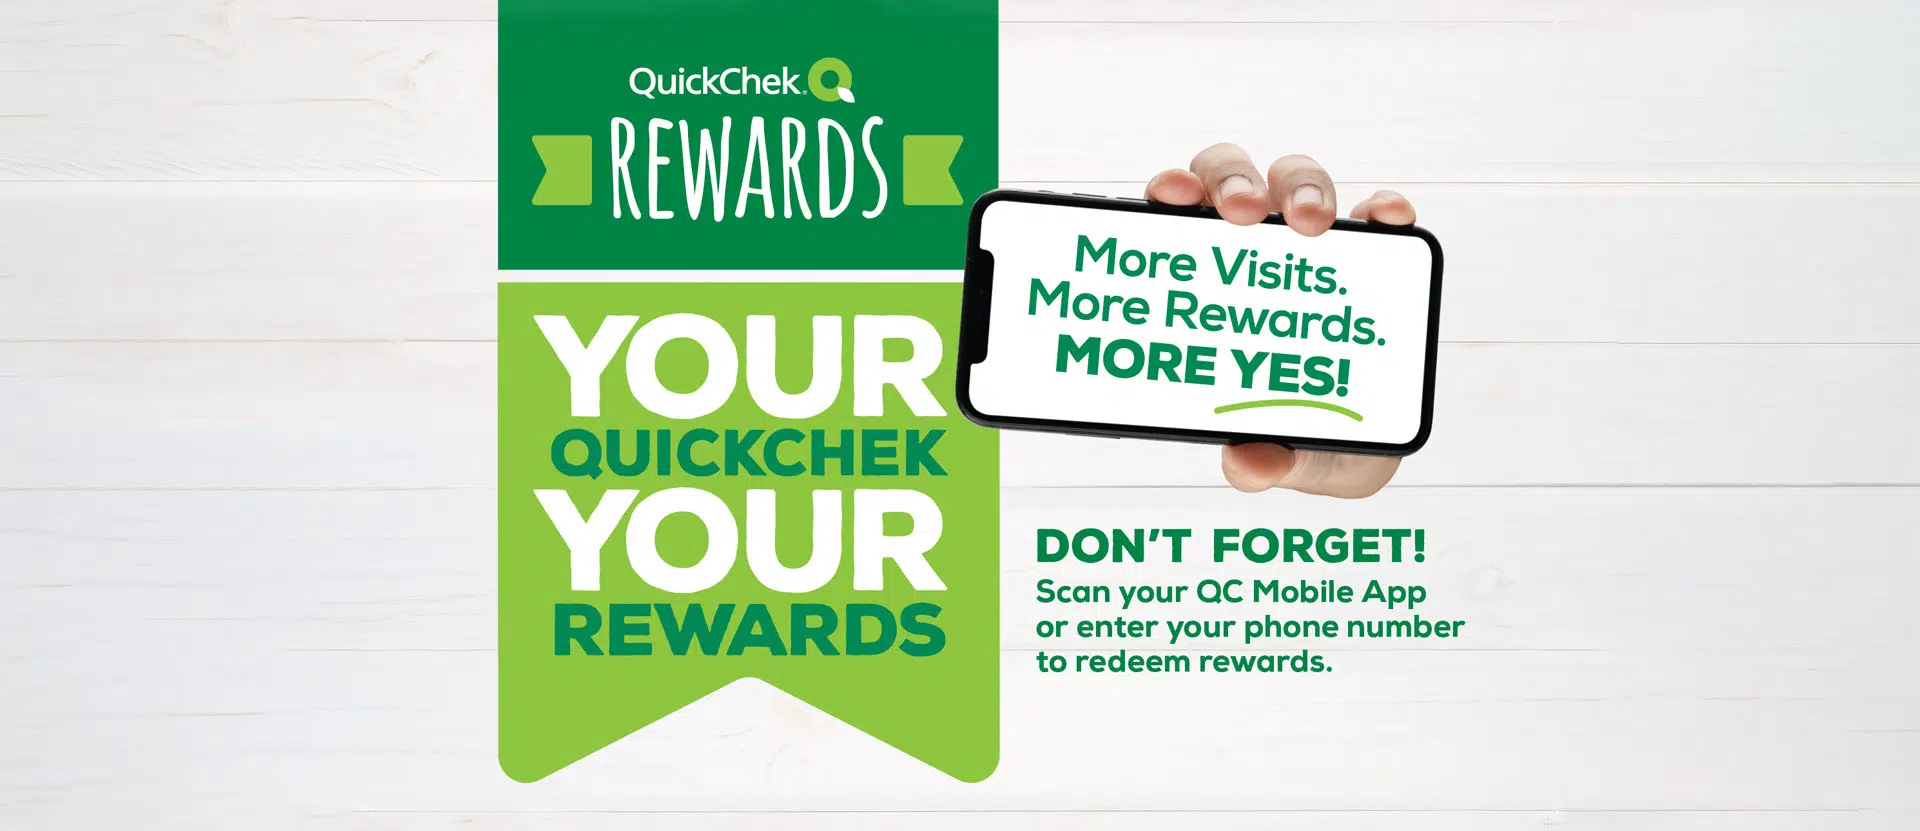 Mobile App Advertisement for QuickChek